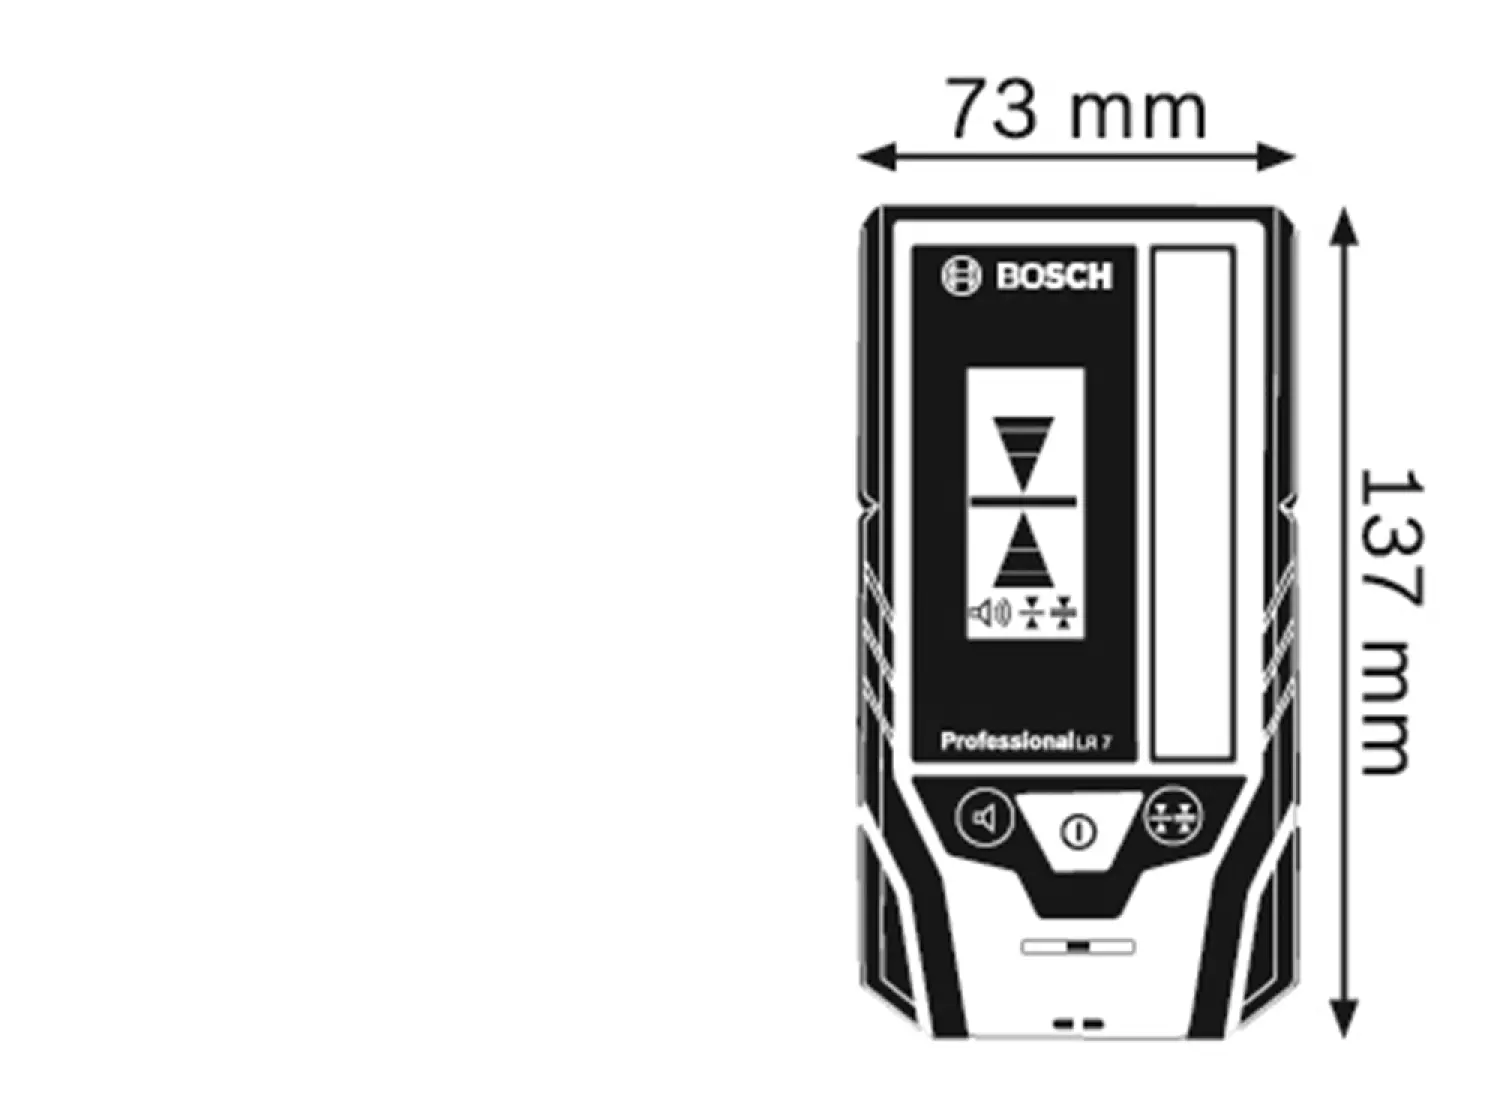 Bosch LR 7 Laserontvanger - Rood/groen